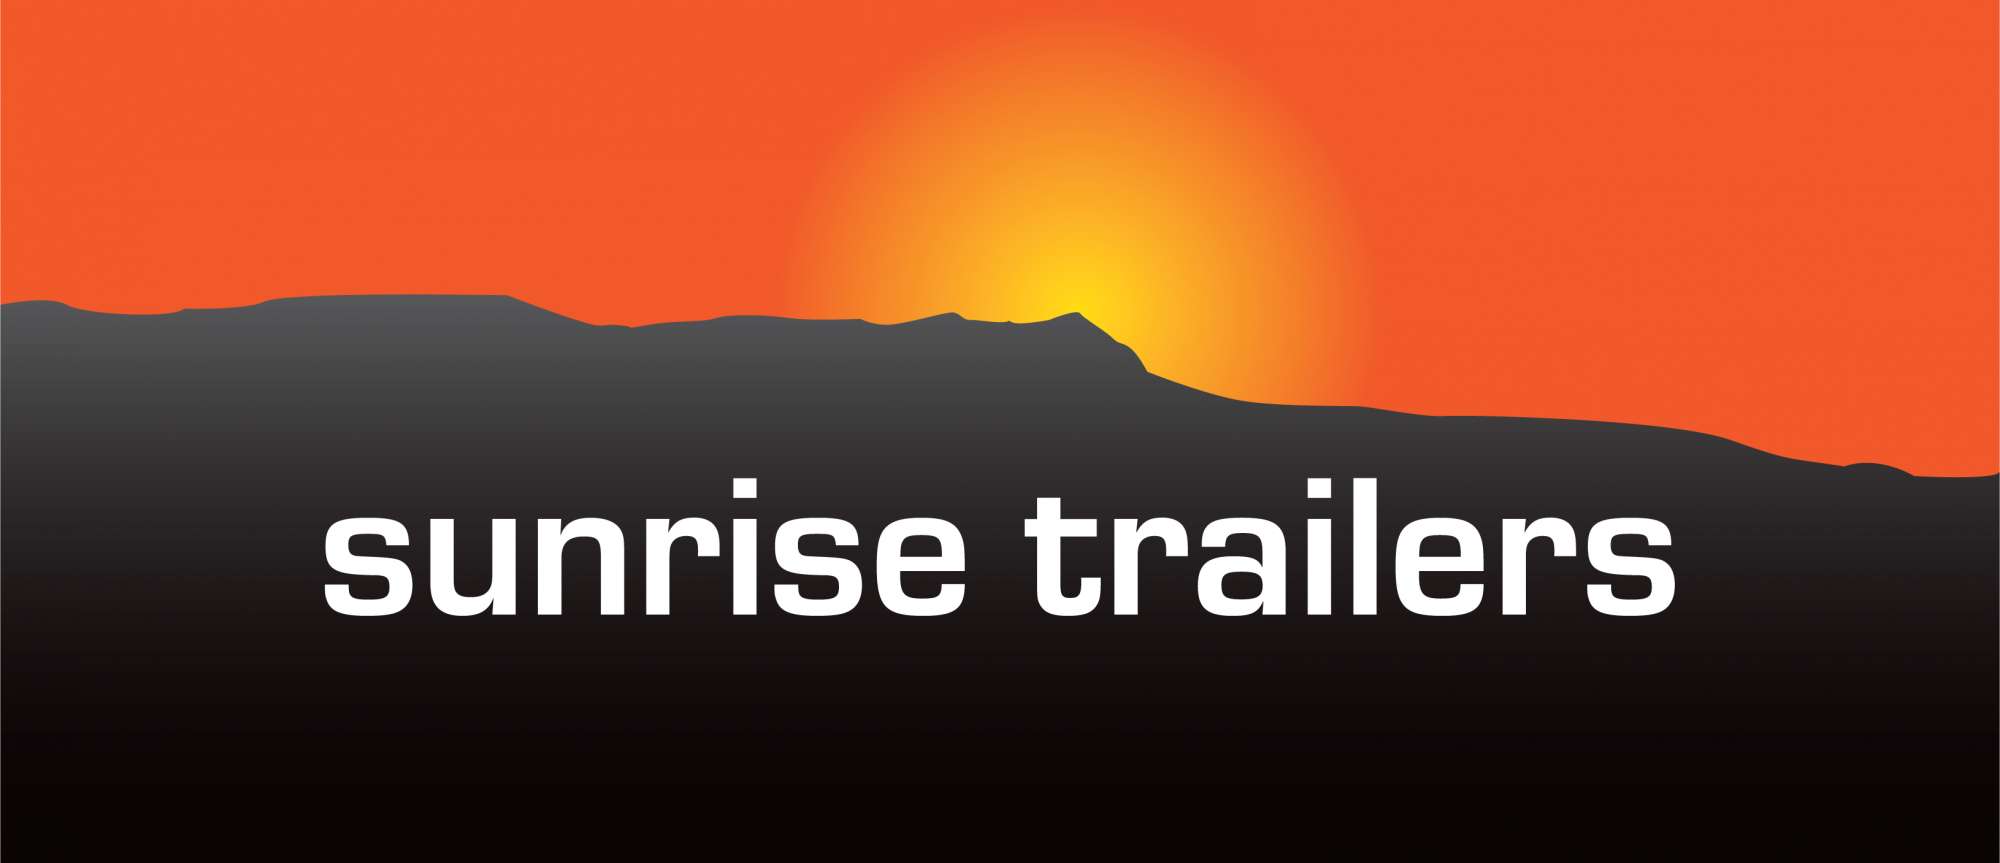 Sunrise trailers CMYK H 300dpi